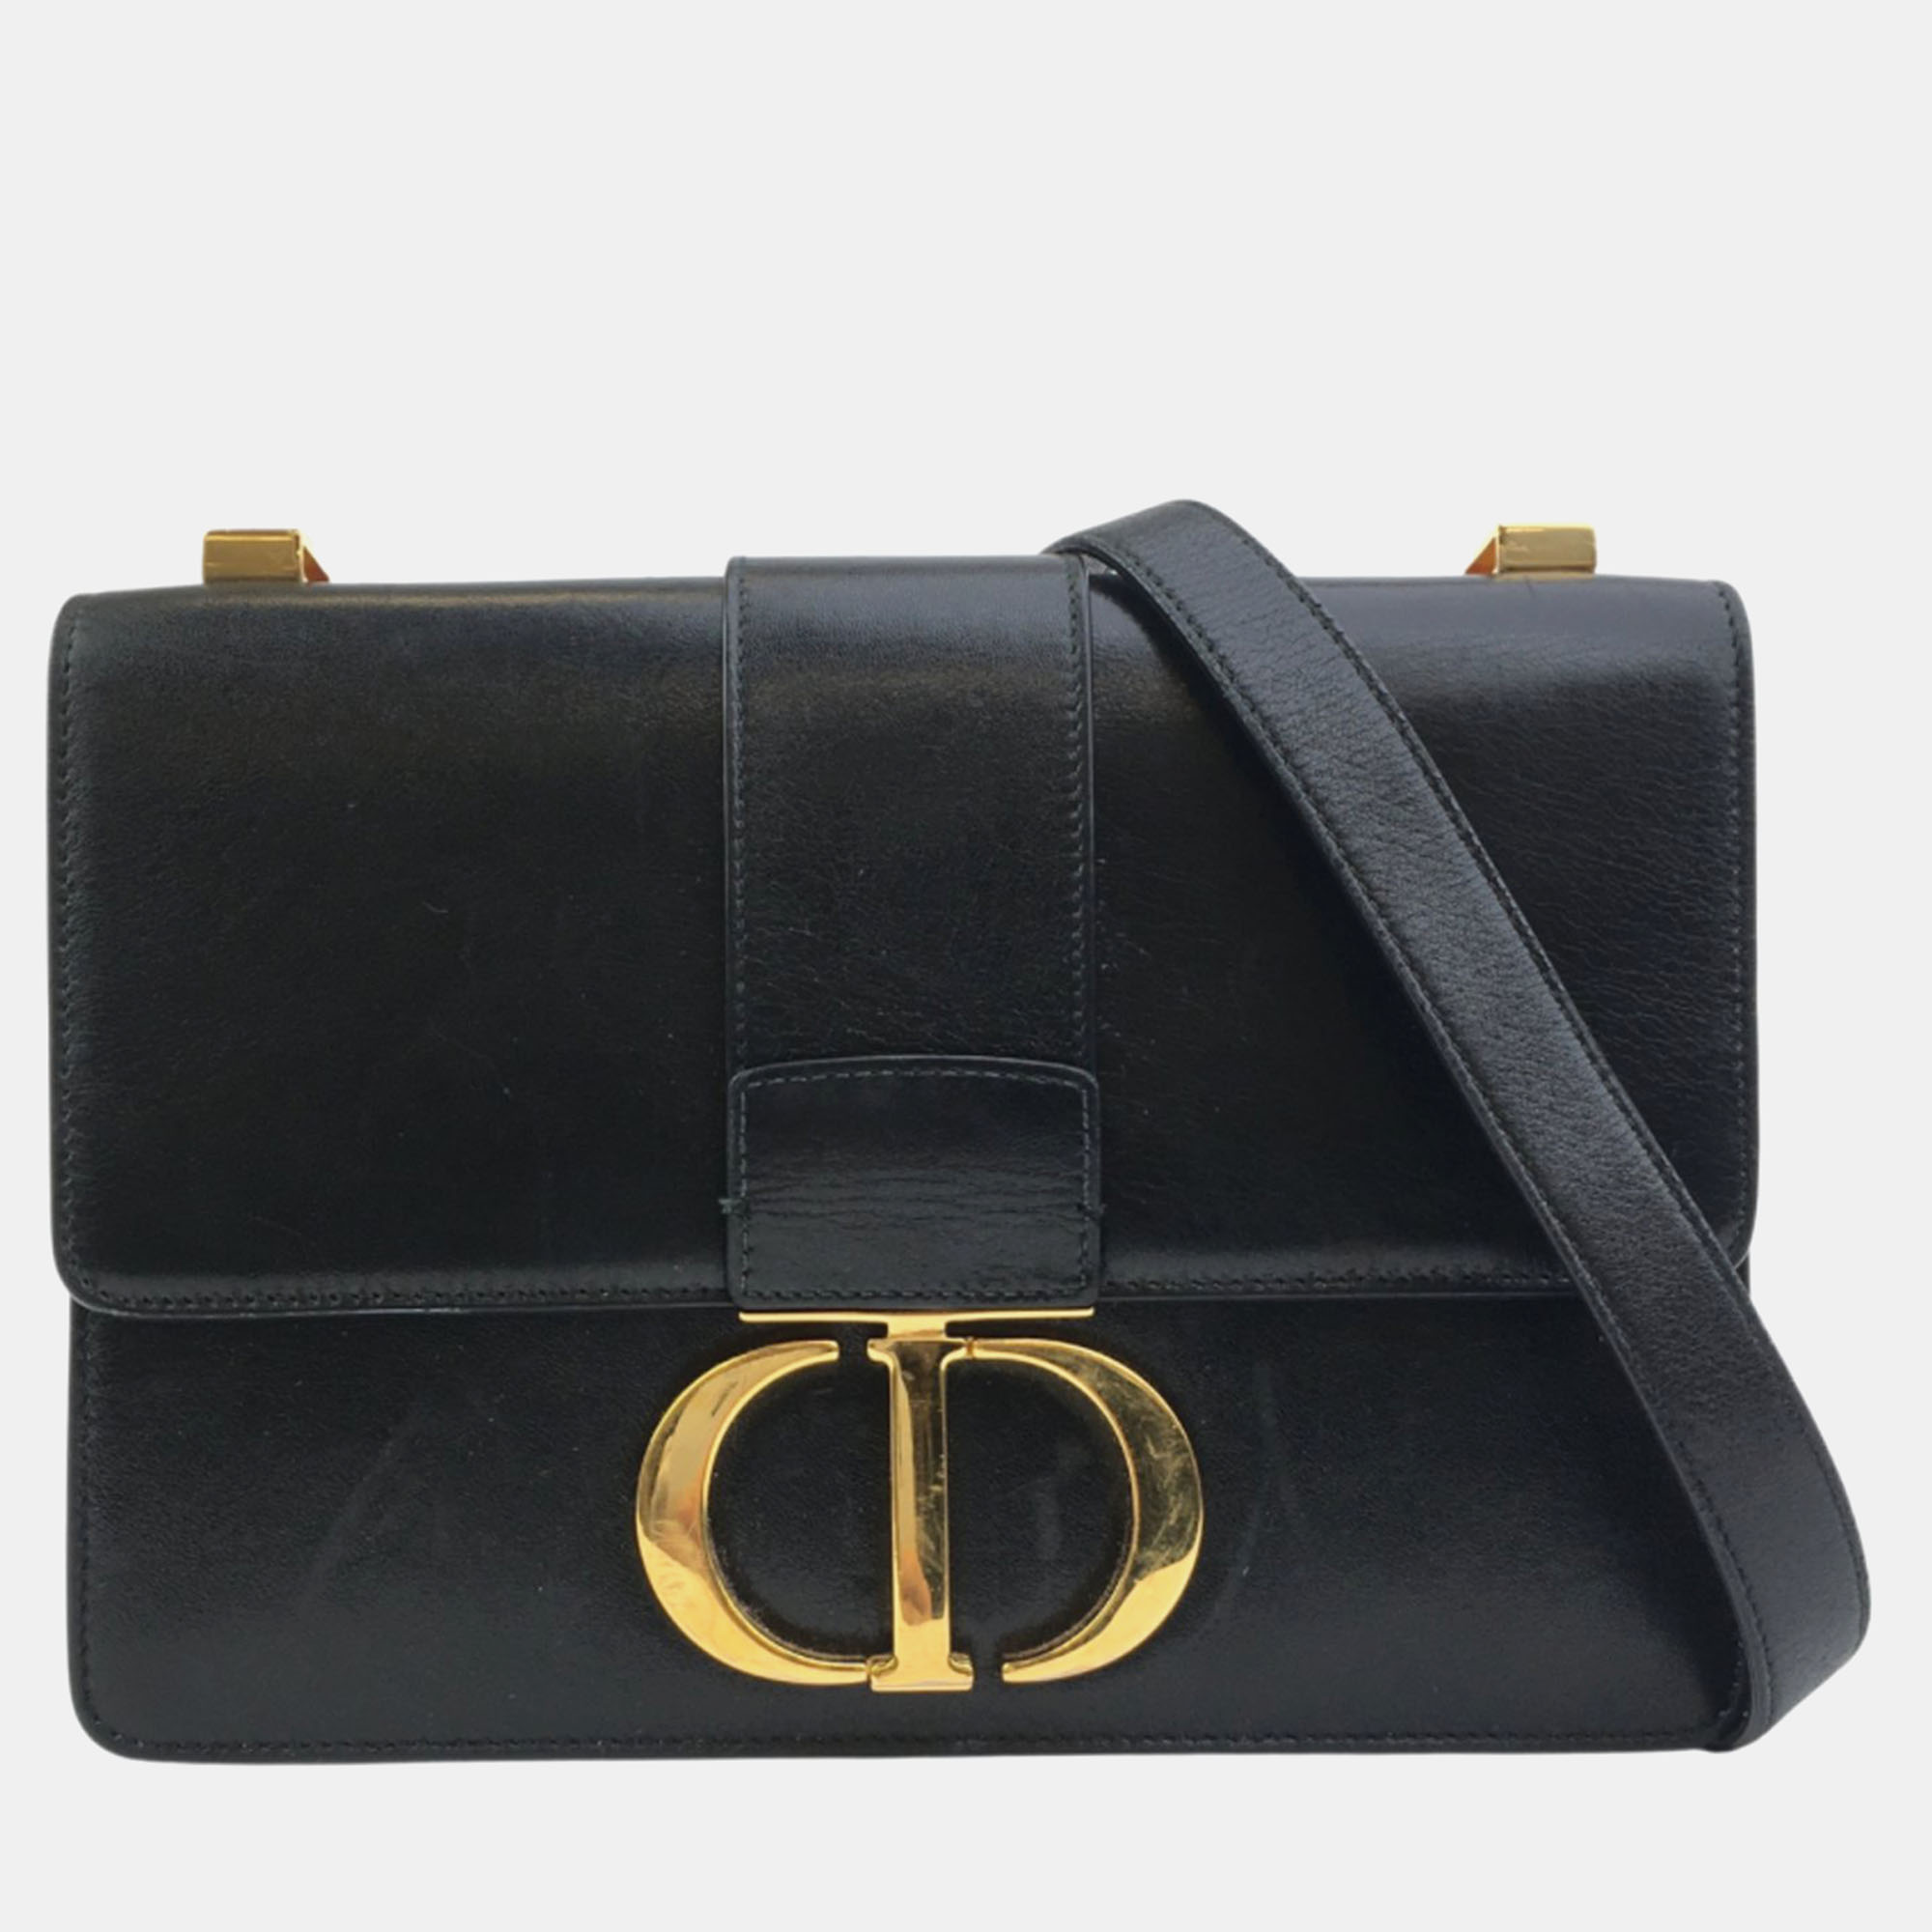 Dior black leather 30 montaigne shoulder bag